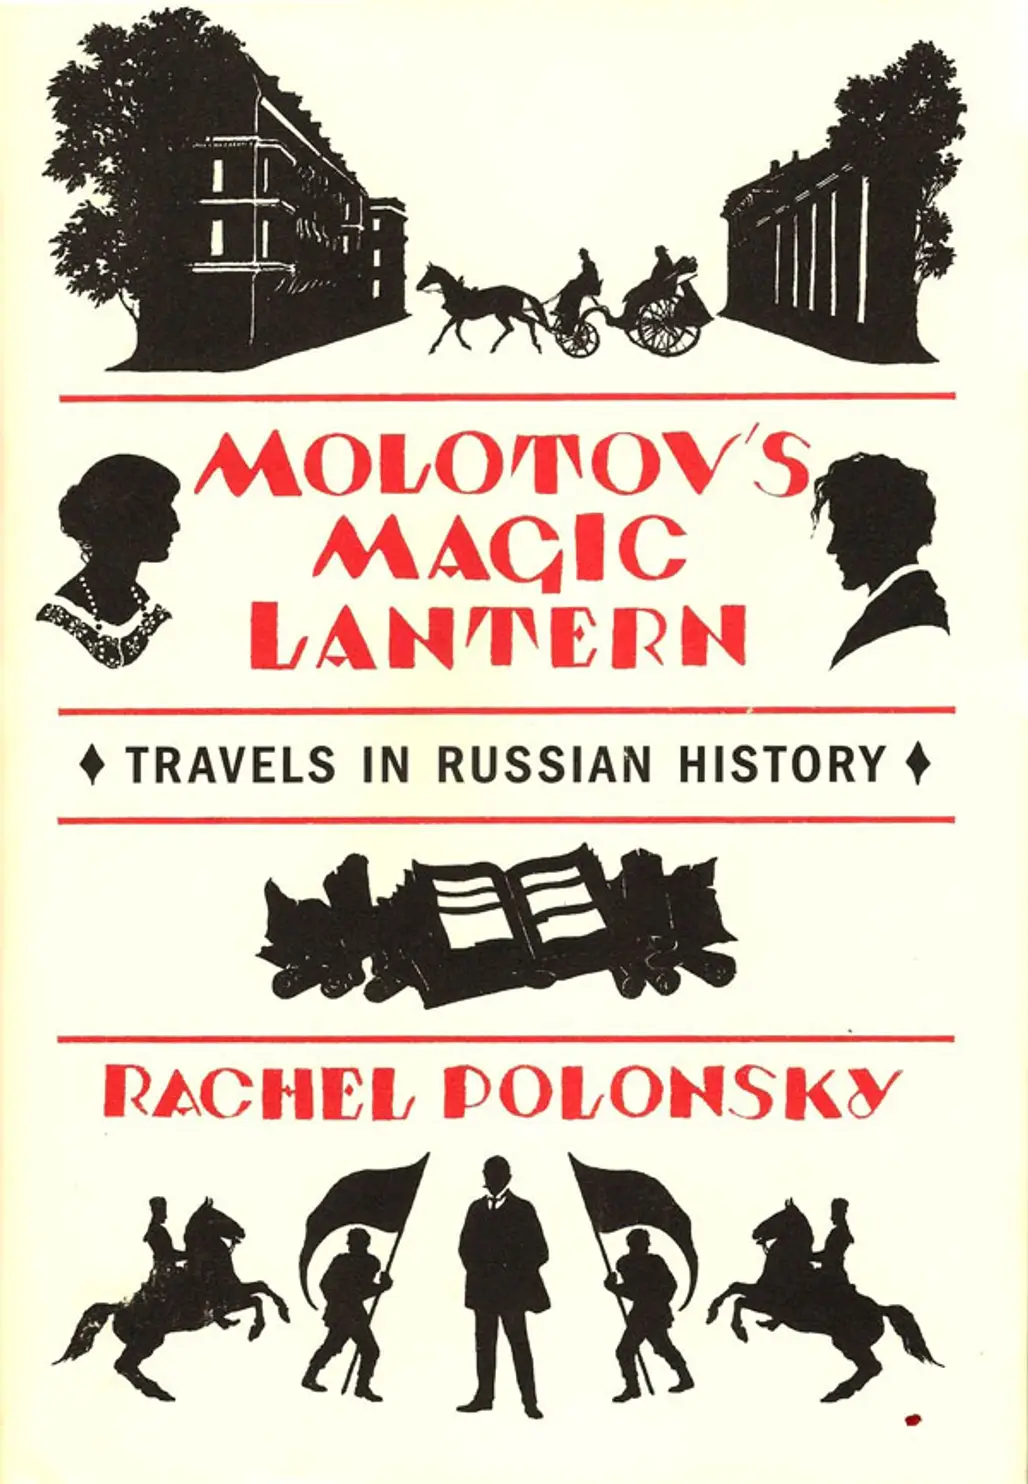 Molotov’s Magic Lantern: by Rachel Polonksy